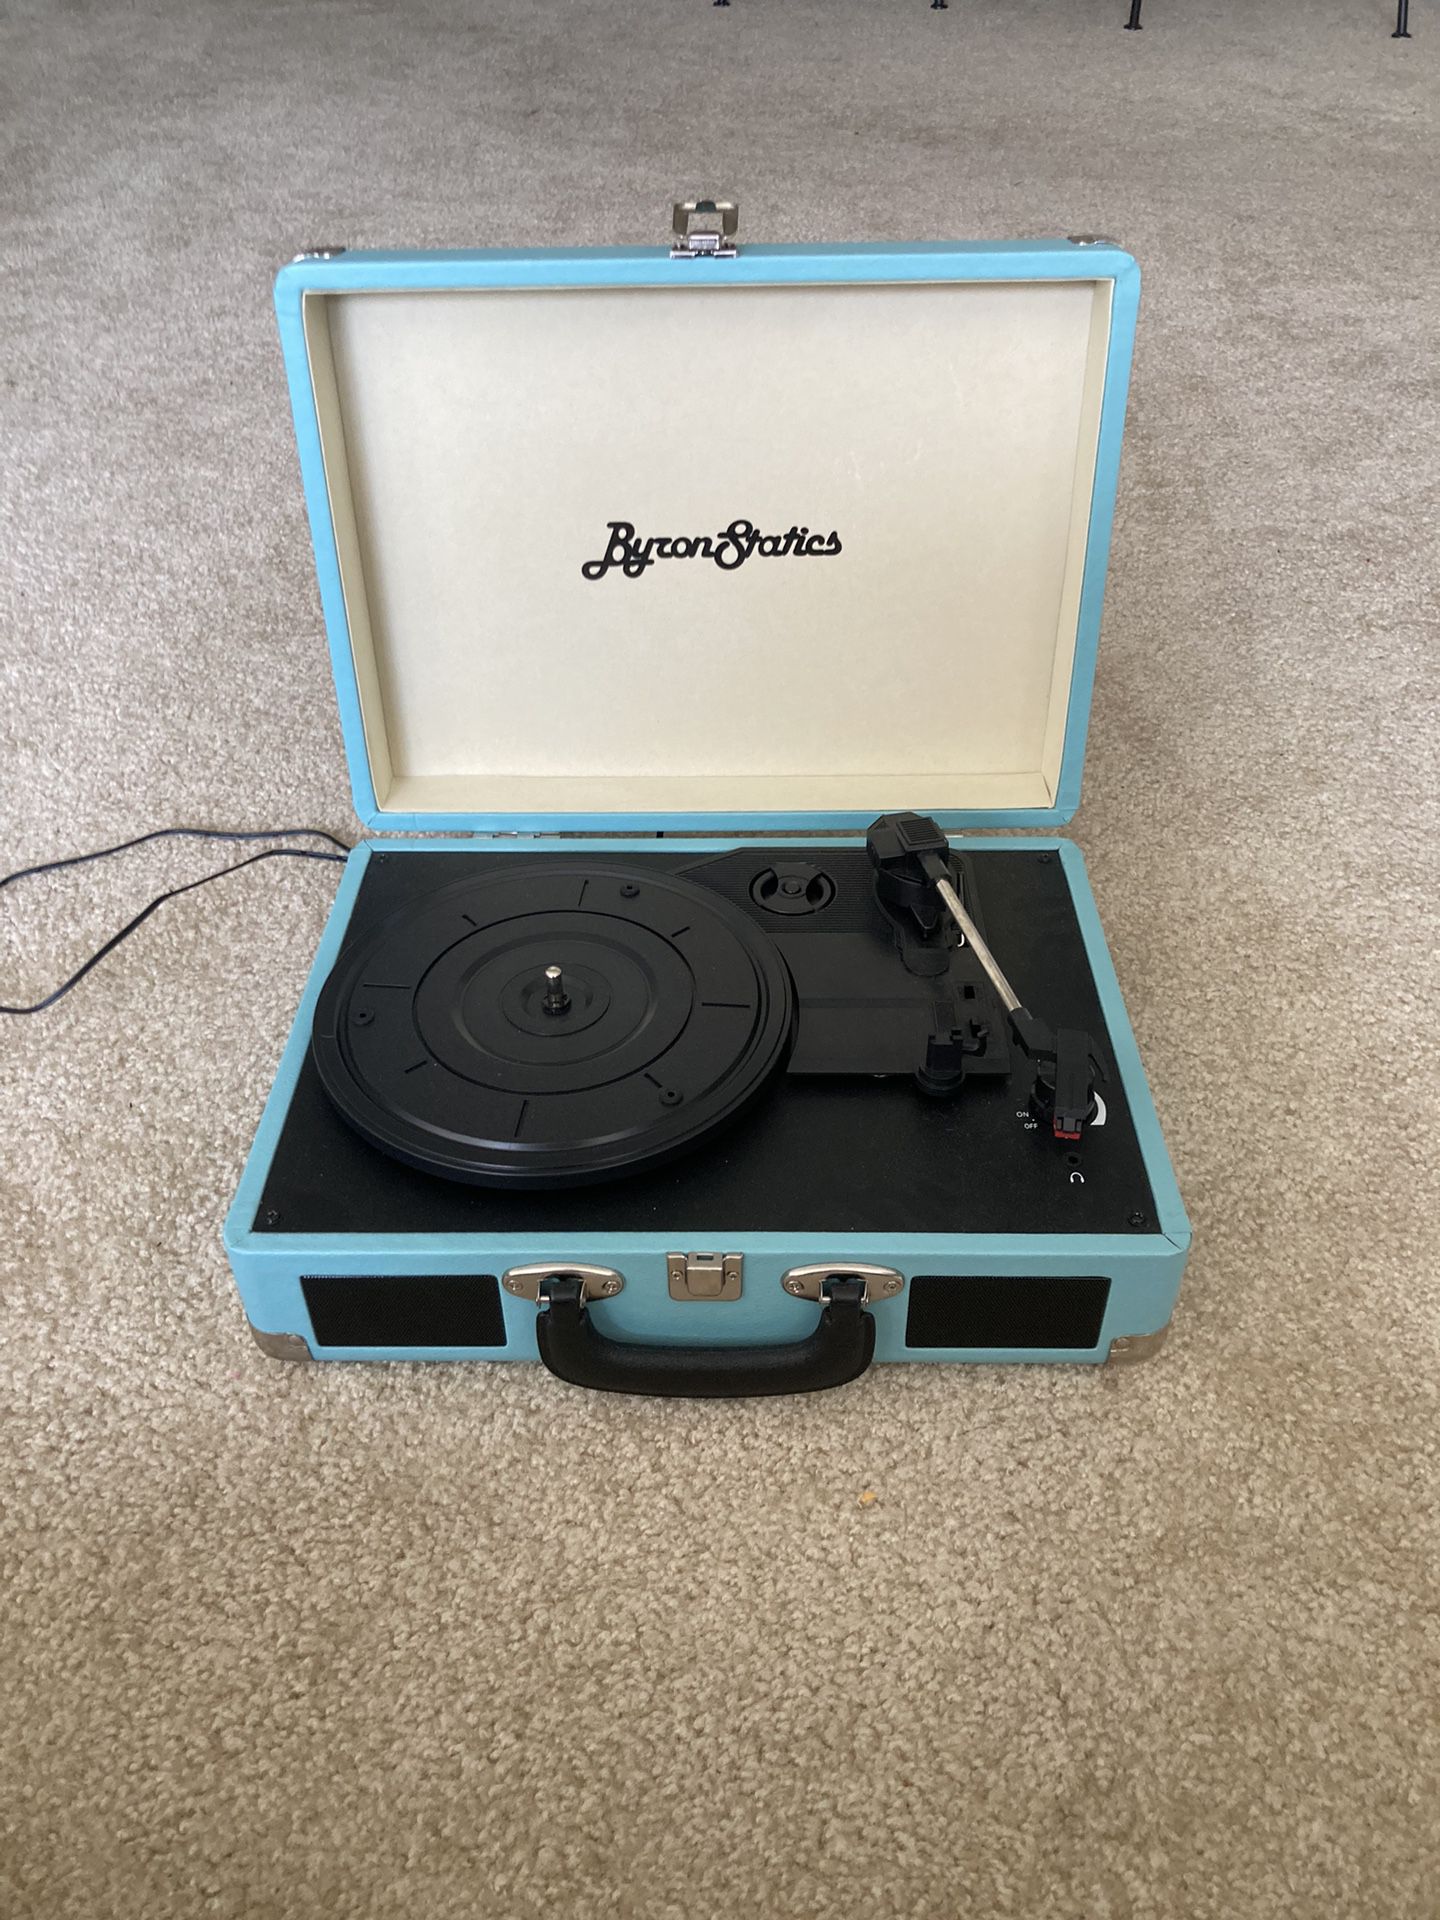 Byron Statics Turntable Vinyl Record Player Portable Vintage Suitcase, Teal